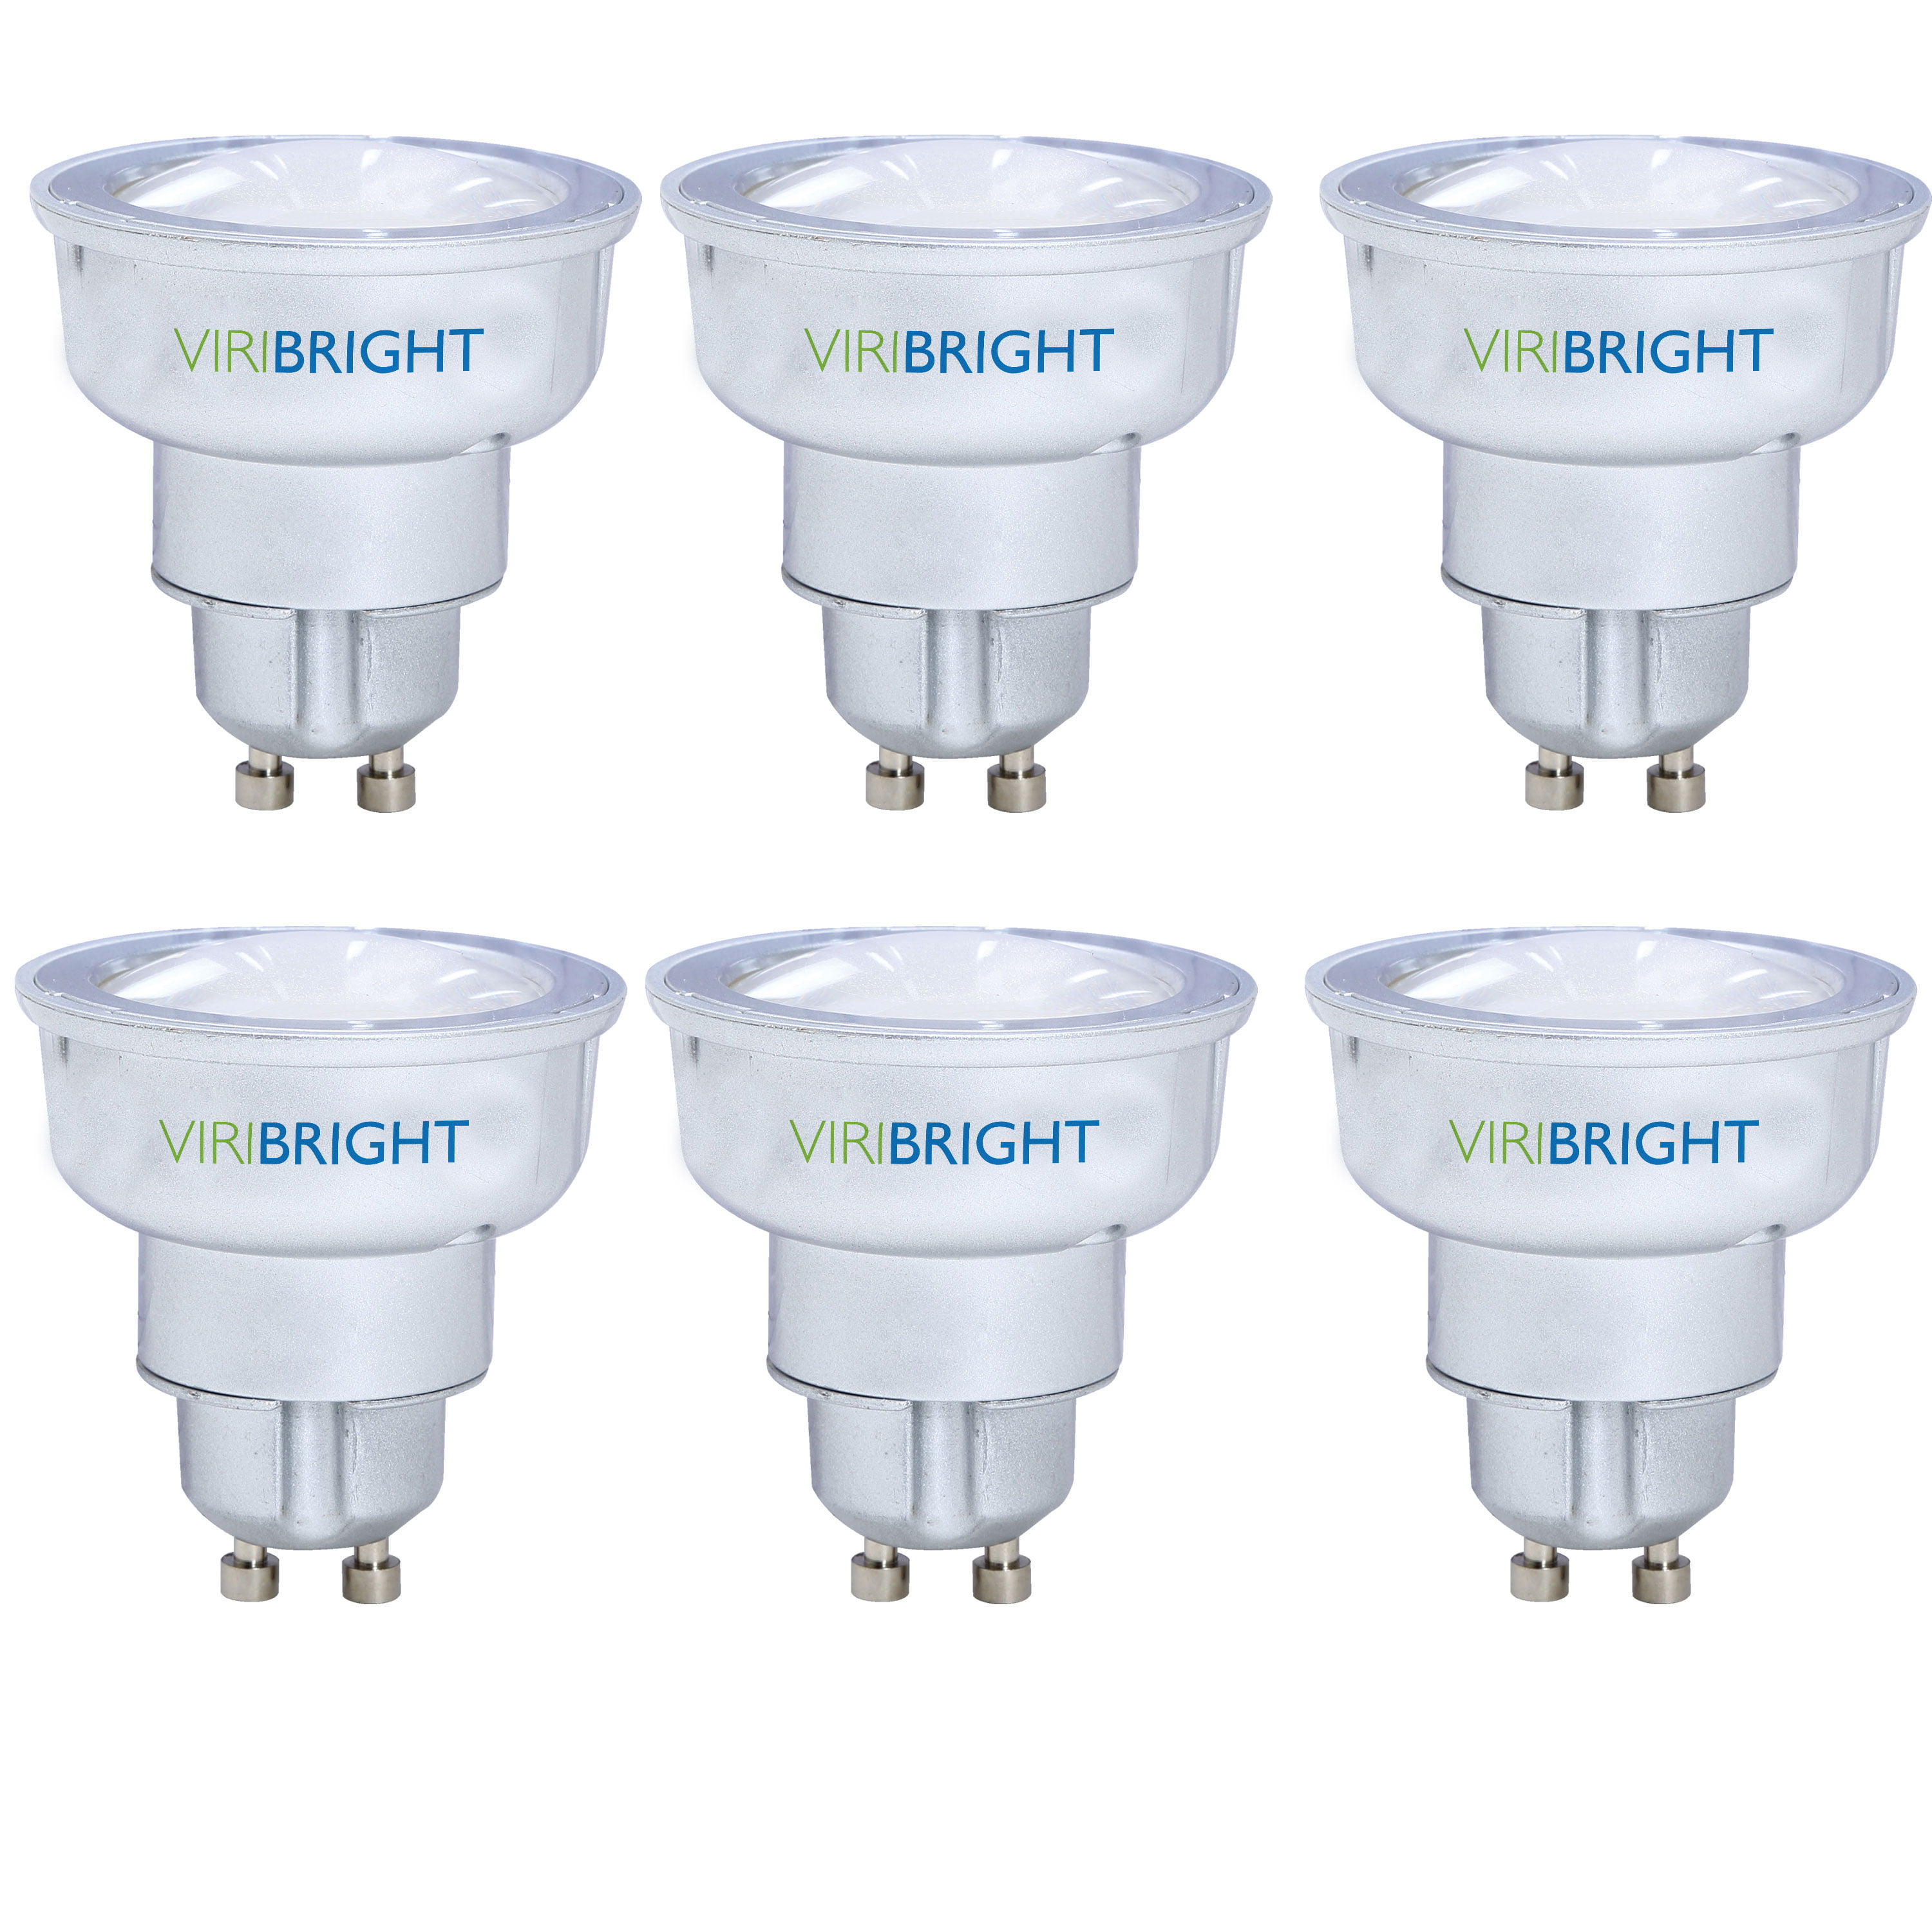 Viribright 35 Watt Replacement MR16 LED Light Bulb (6 pack), Dimmable, GU10 Base, 2700K Warm